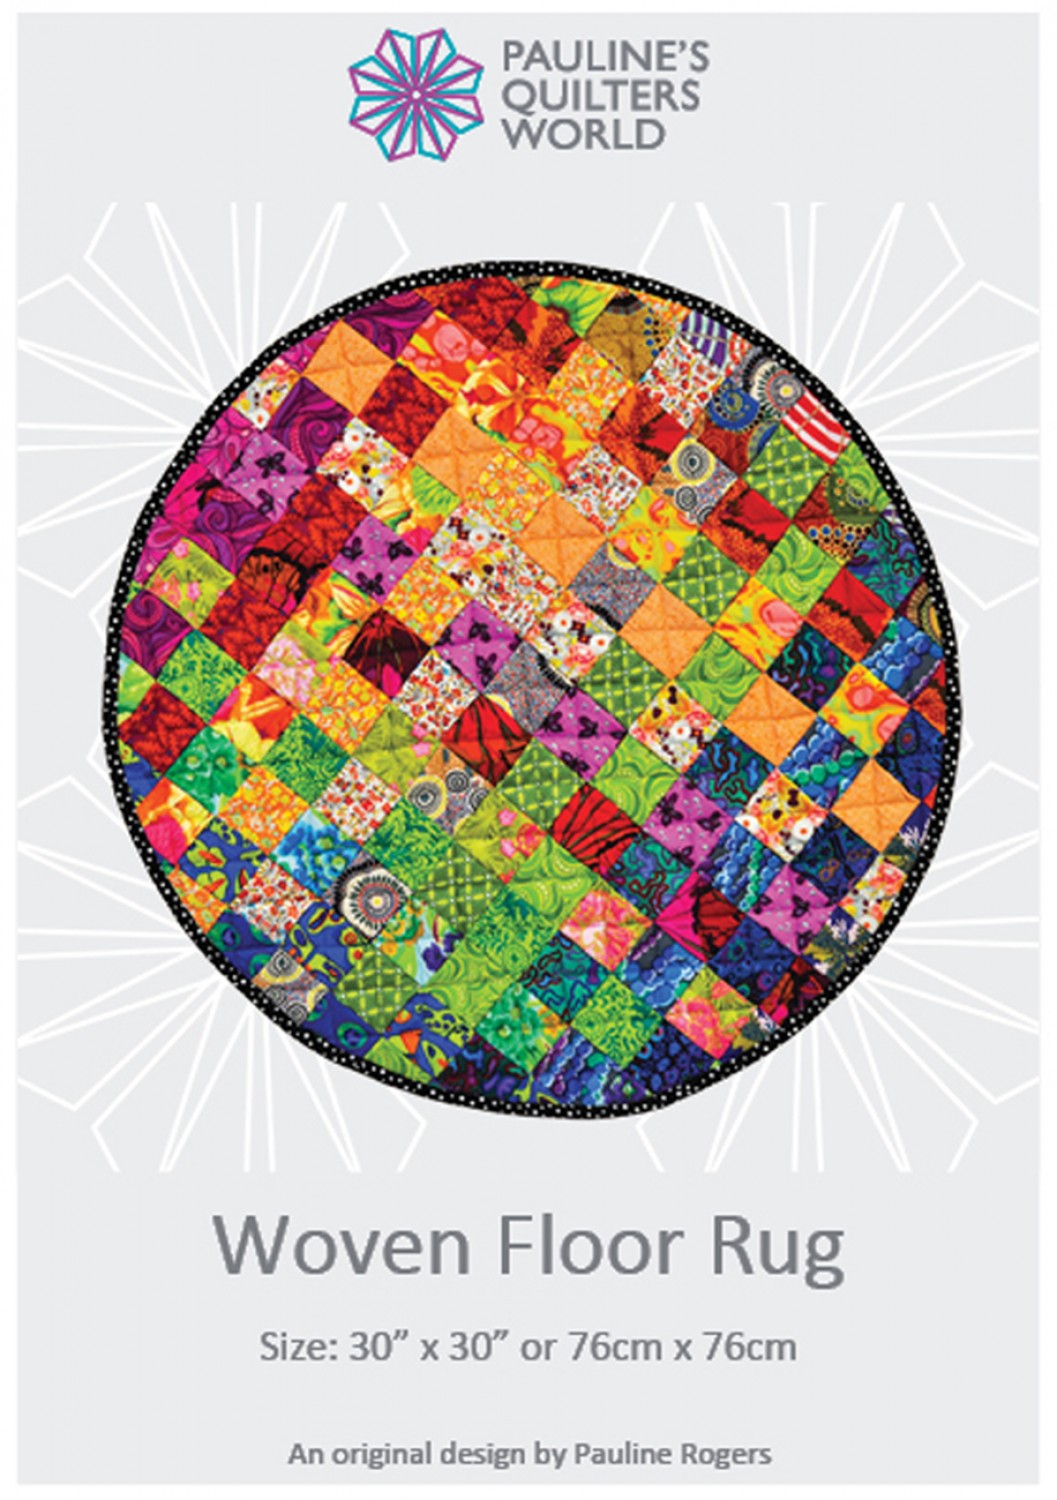 Woven Floor Rug Pattern # PQW-WFRP